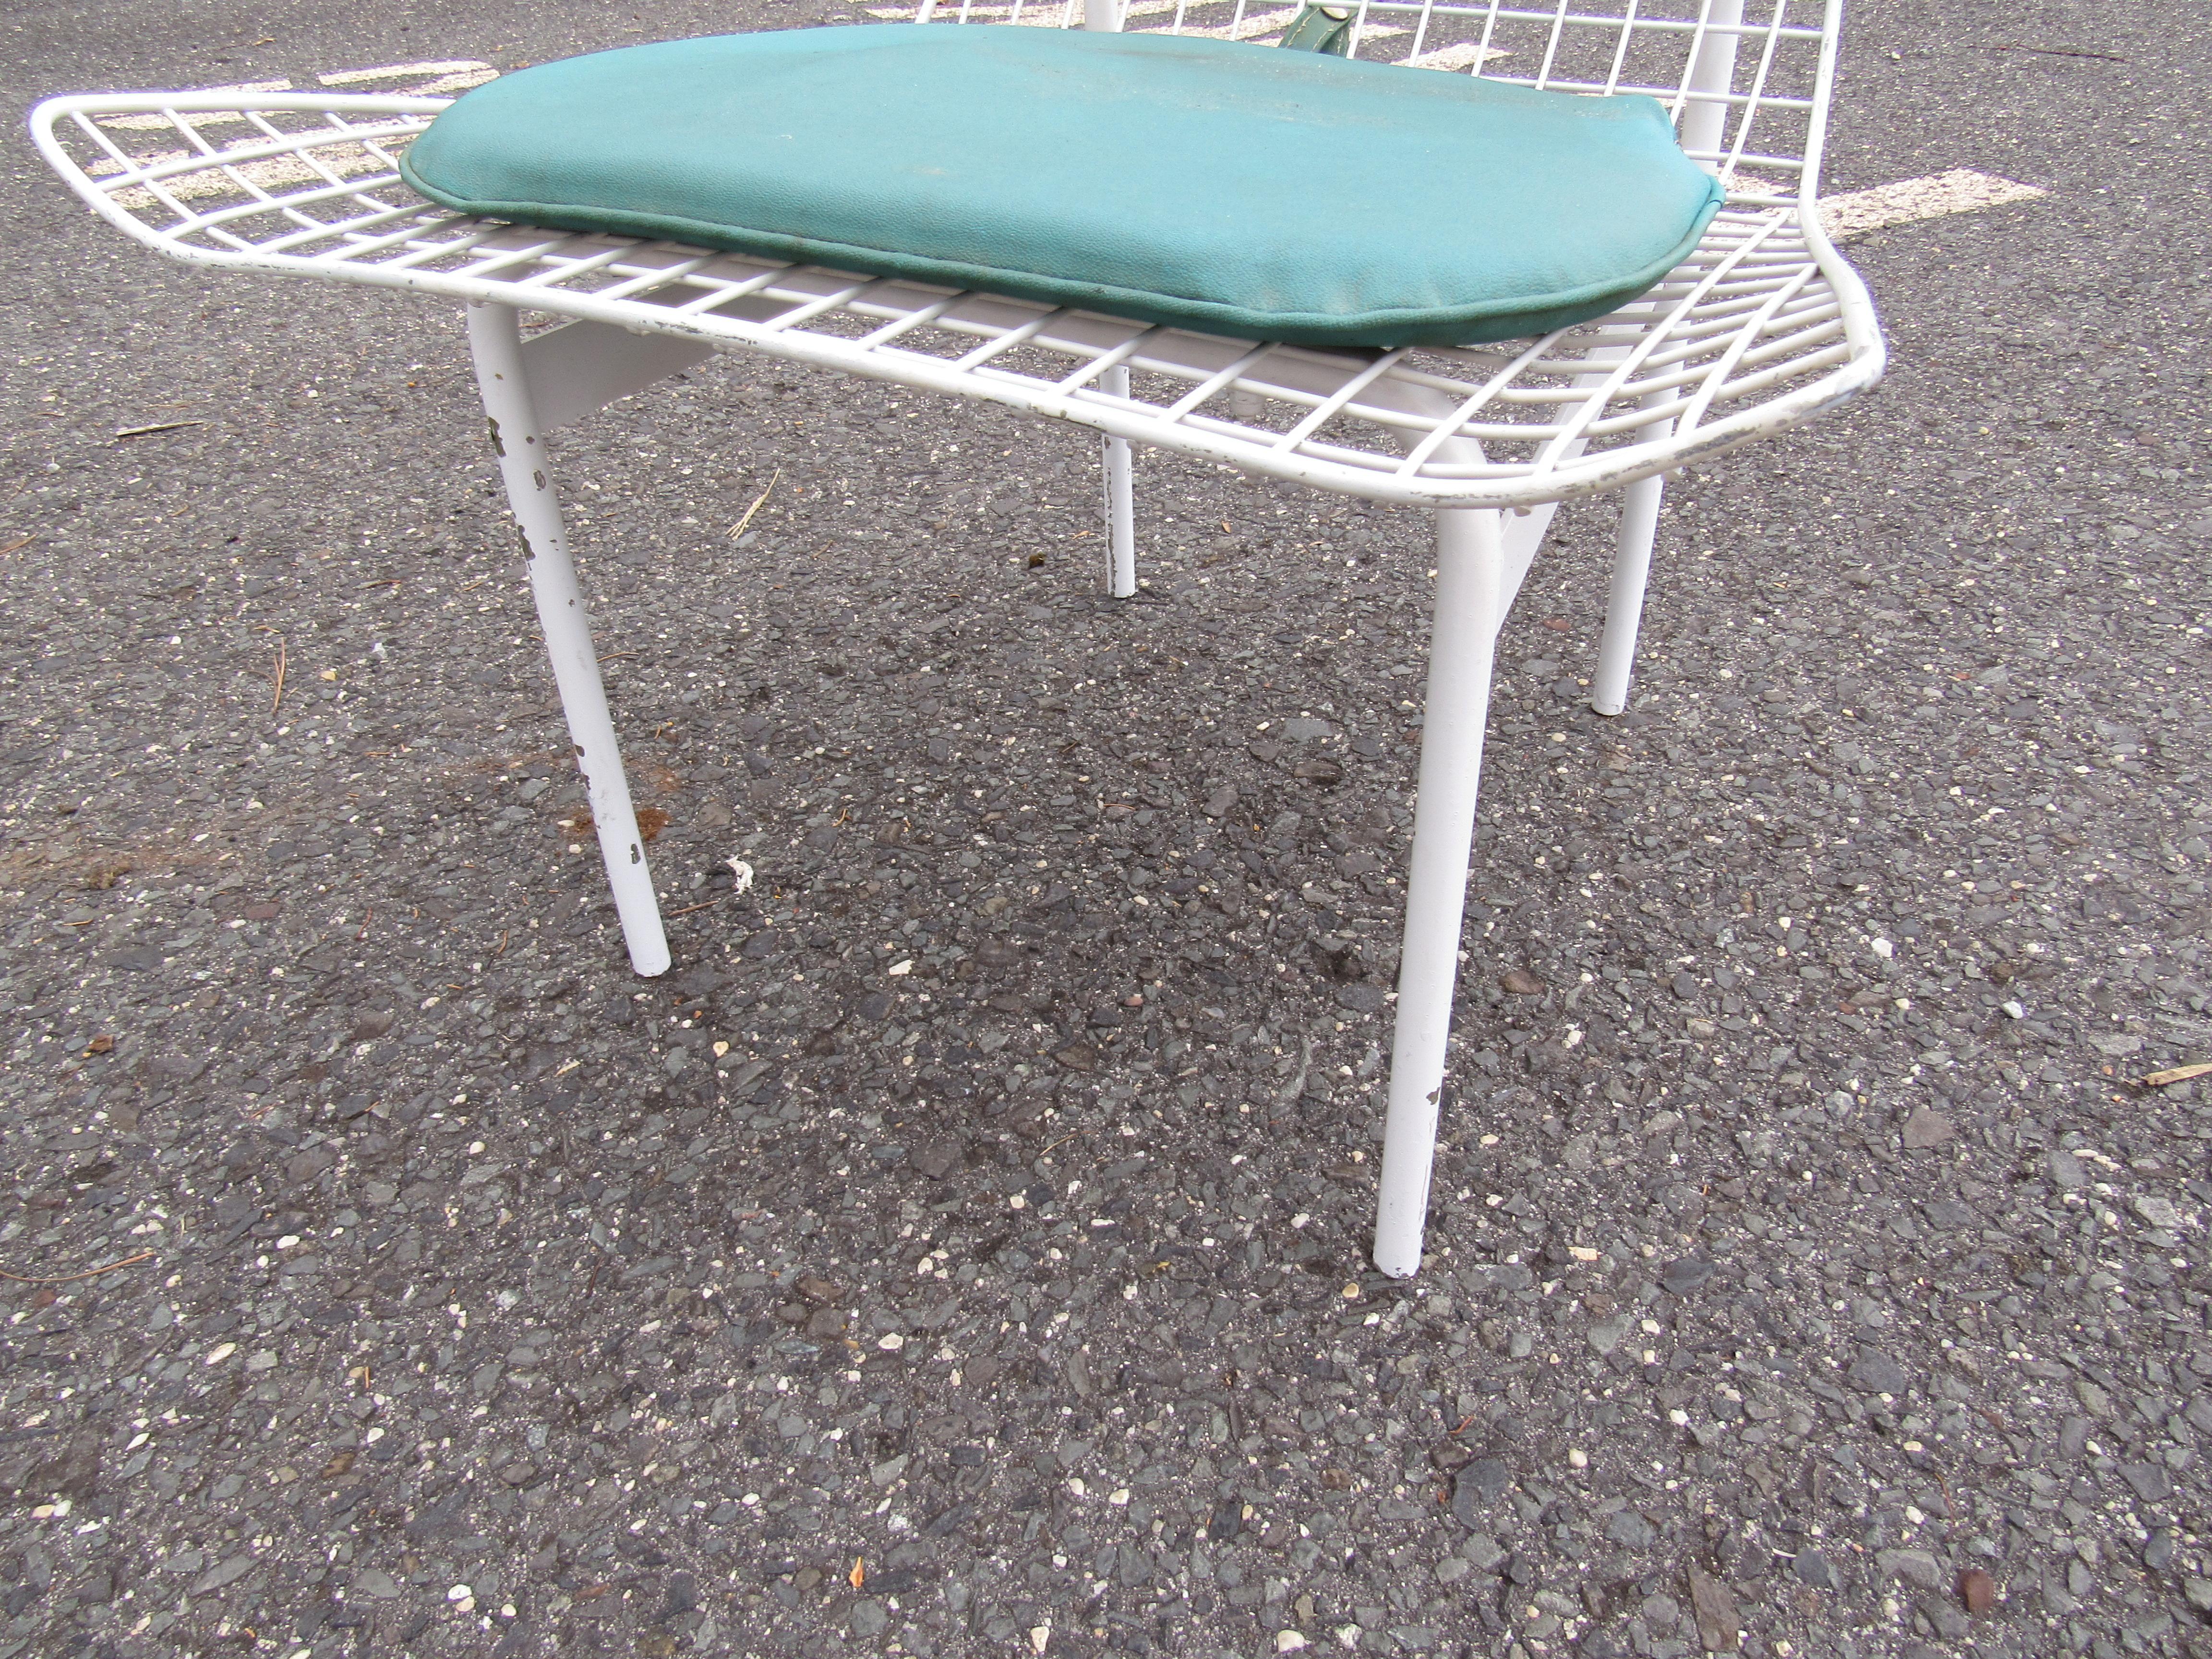 metal mesh patio chairs